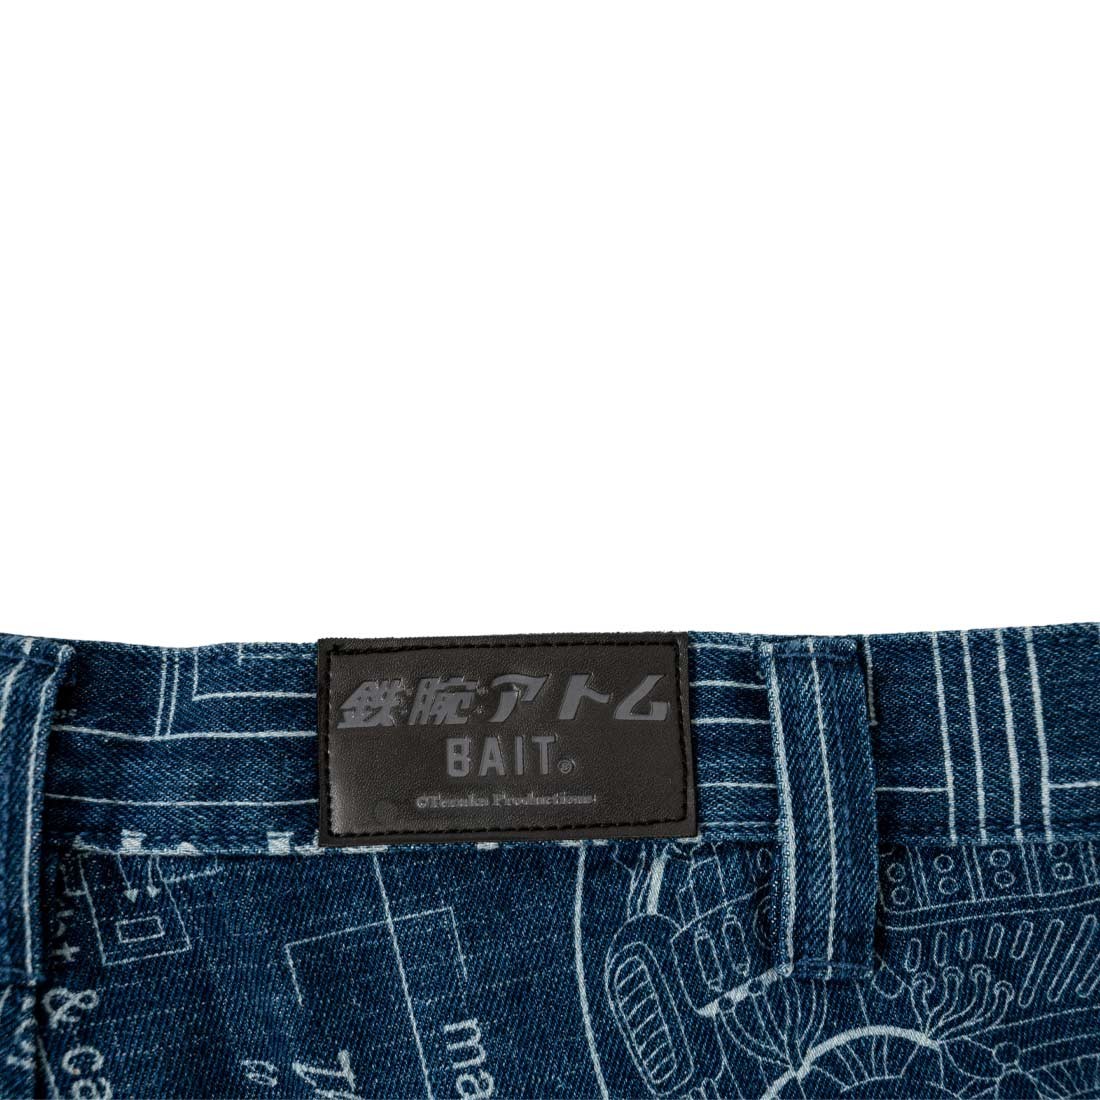 BAIT x Astro Boy Men Denim Jeans blue